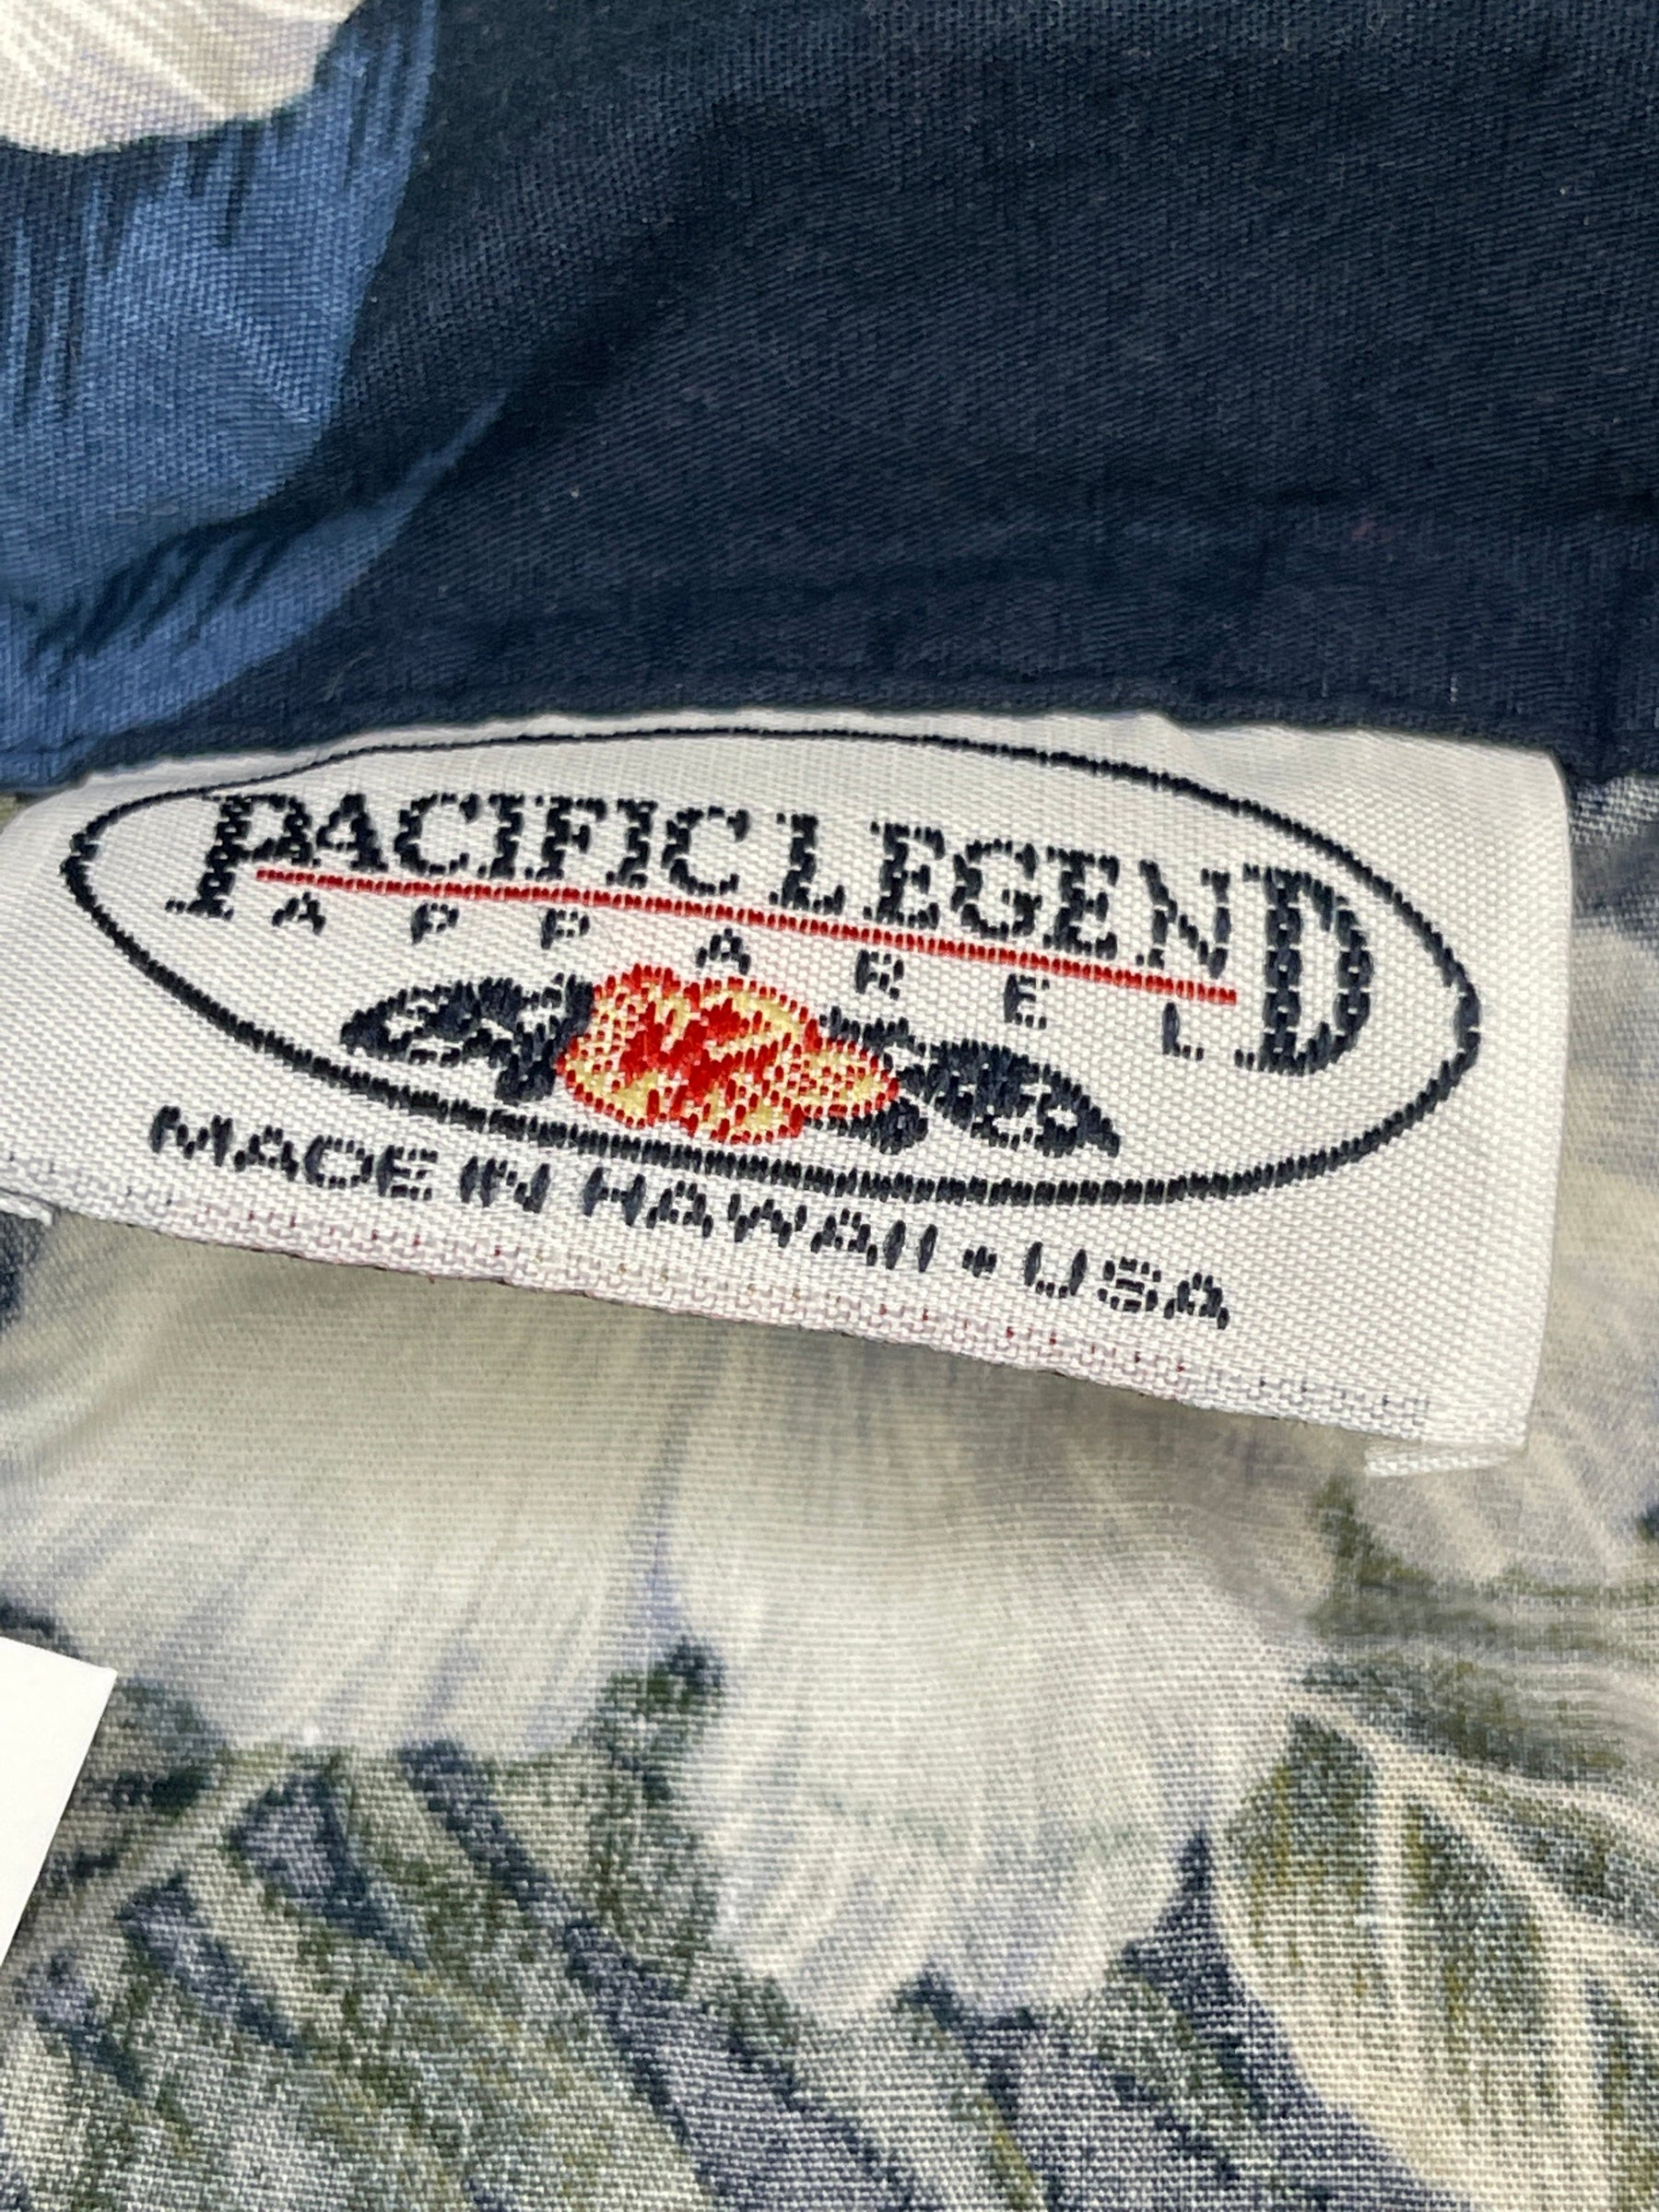 Made in Hawaii Blue/White/Green Floral Hawaiian Aloha Shirt Youth Small 6-8